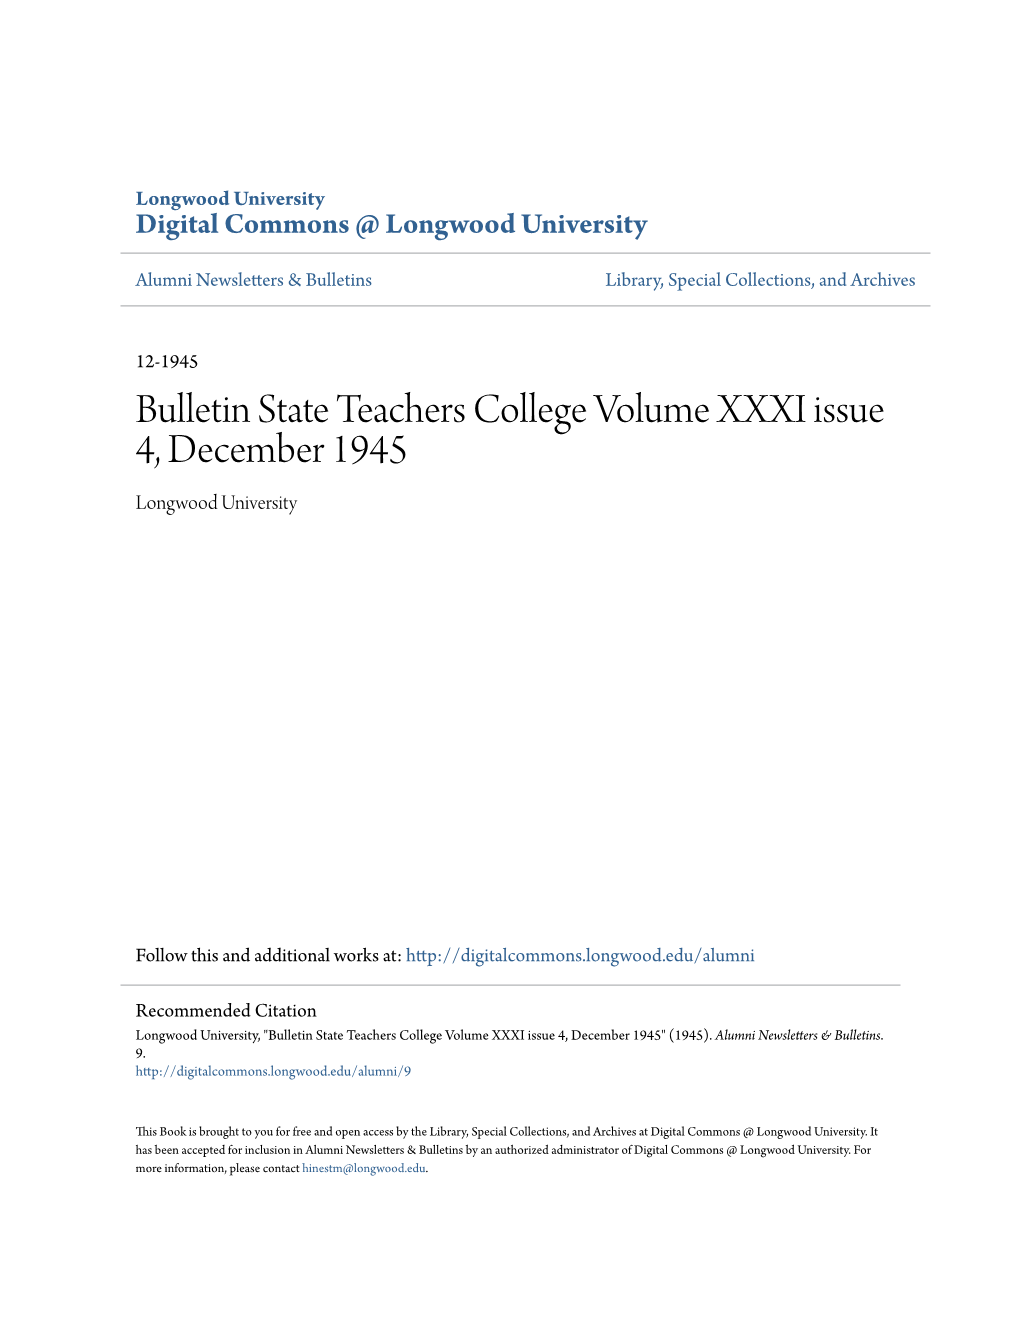 Bulletin State Teachers College Volume XXXI Issue 4, December 1945 Longwood University